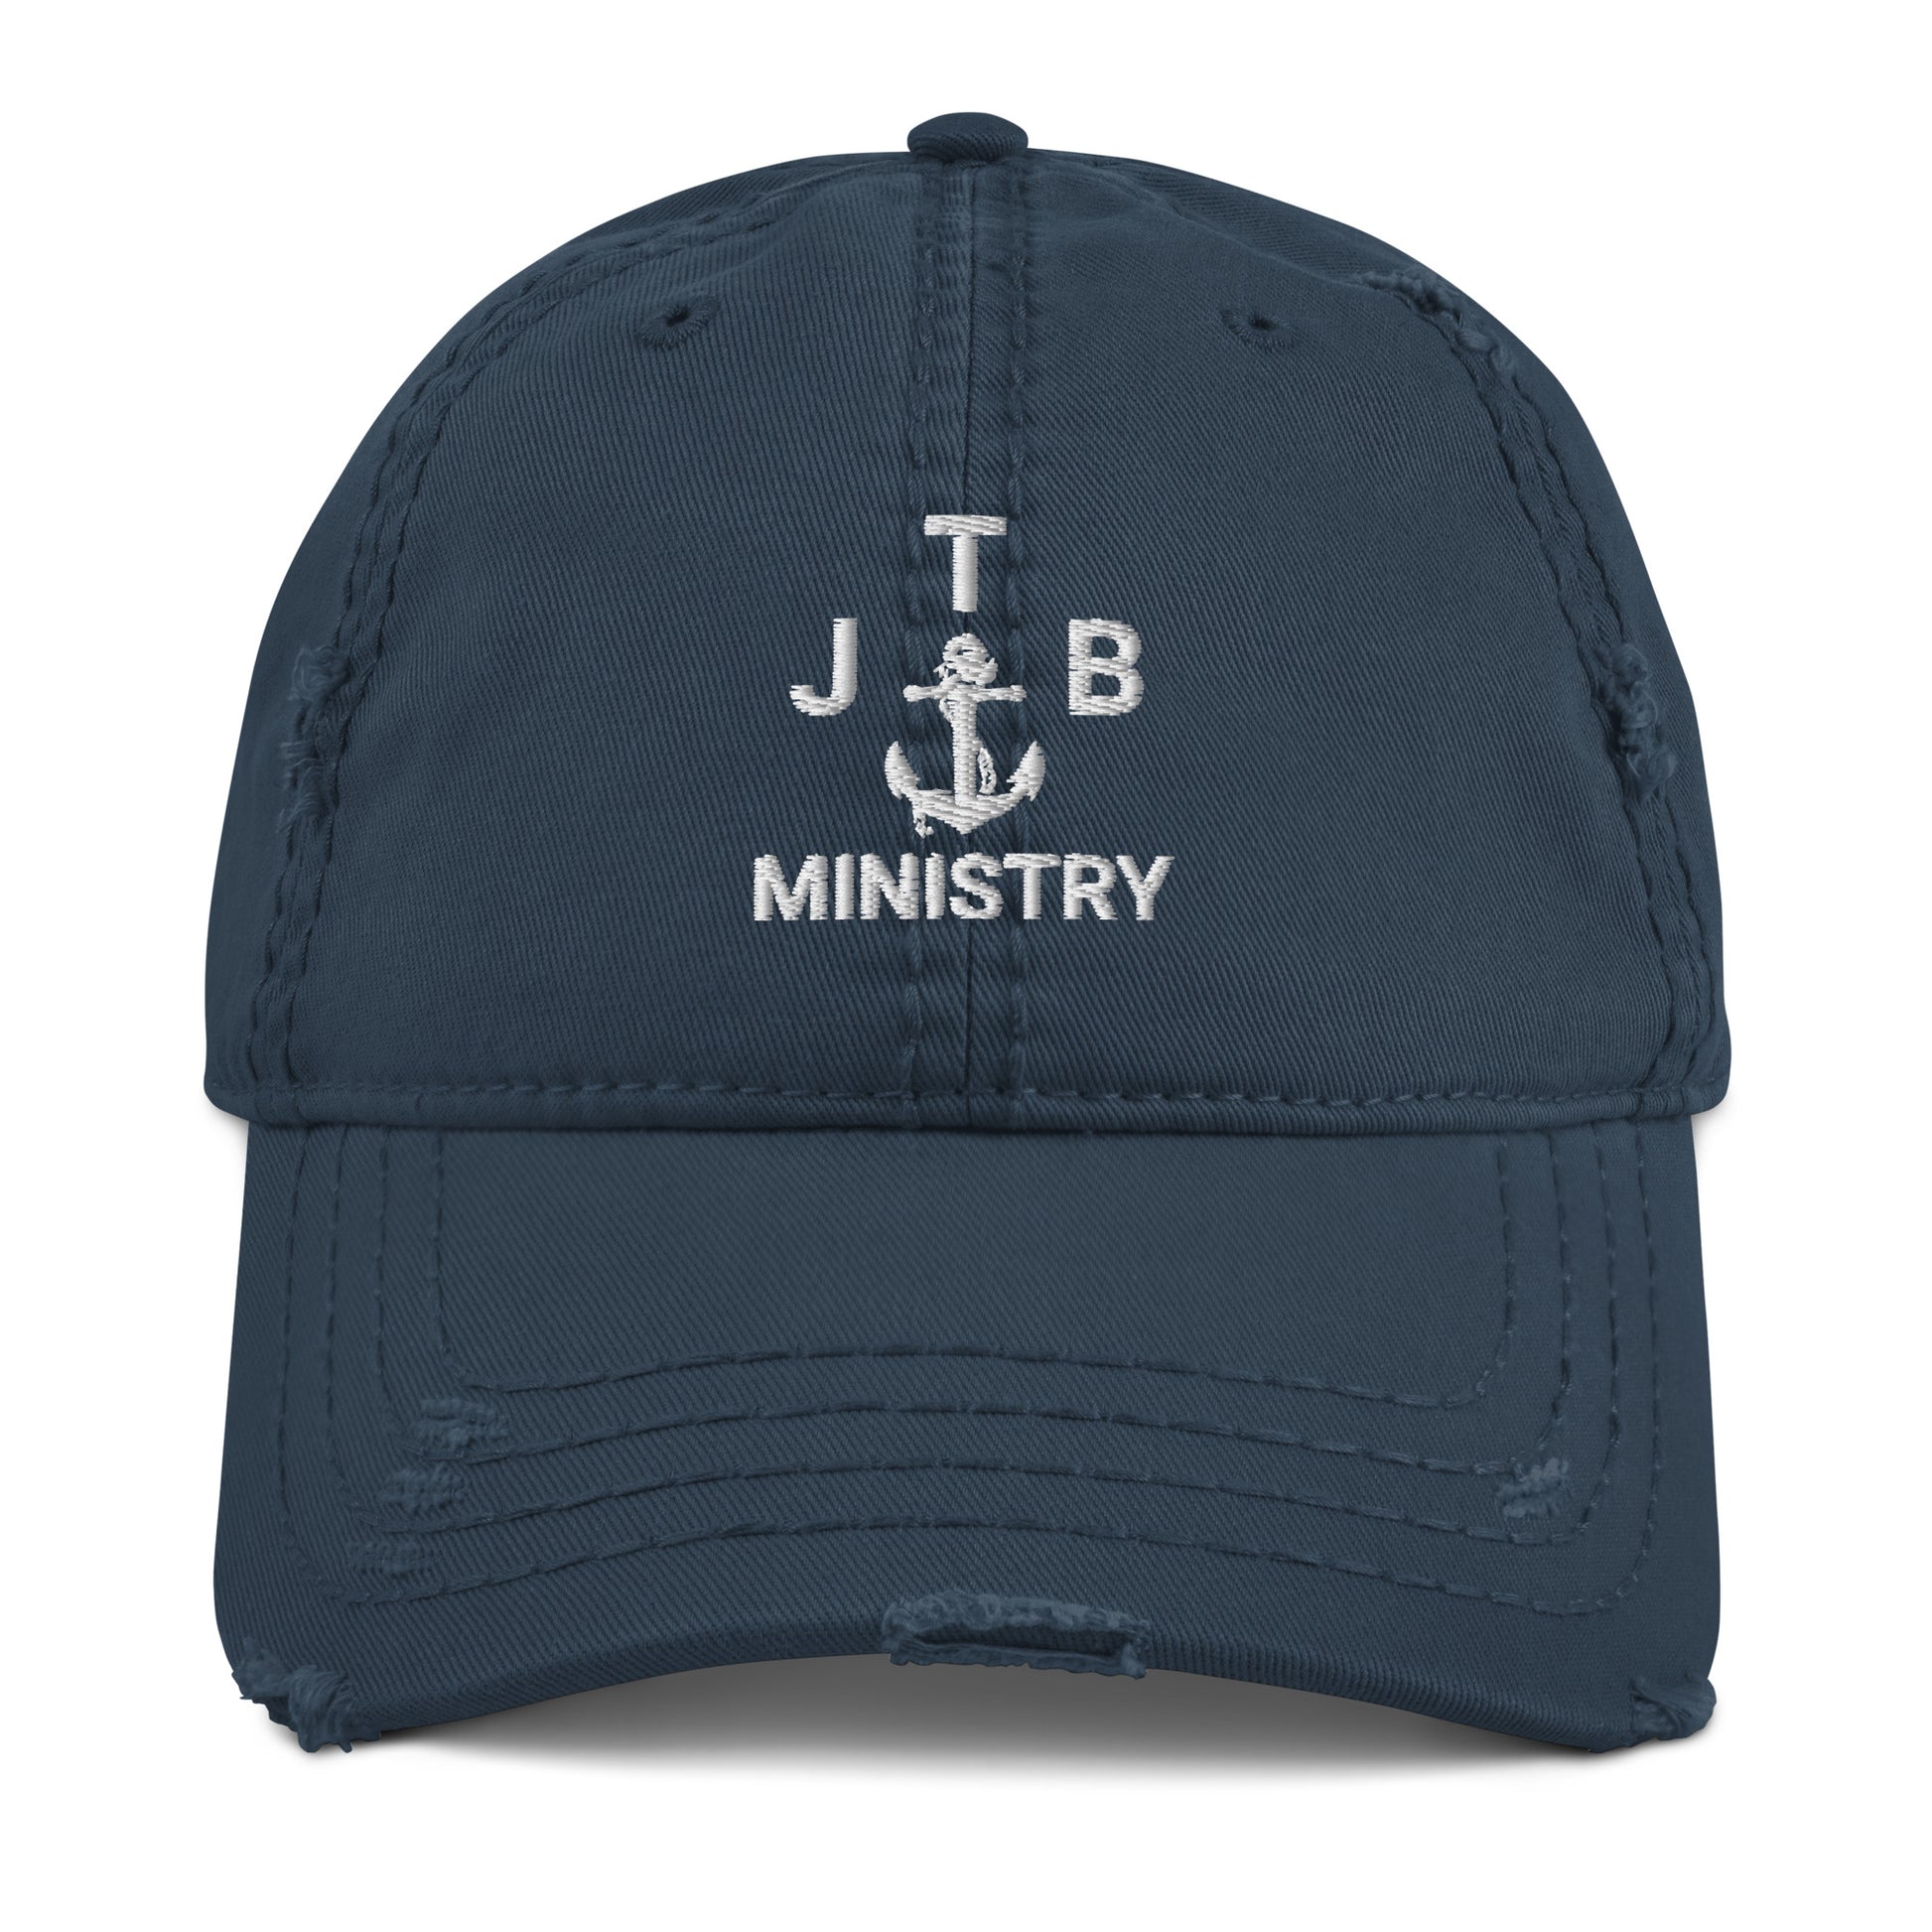 JTB Ministry Hat